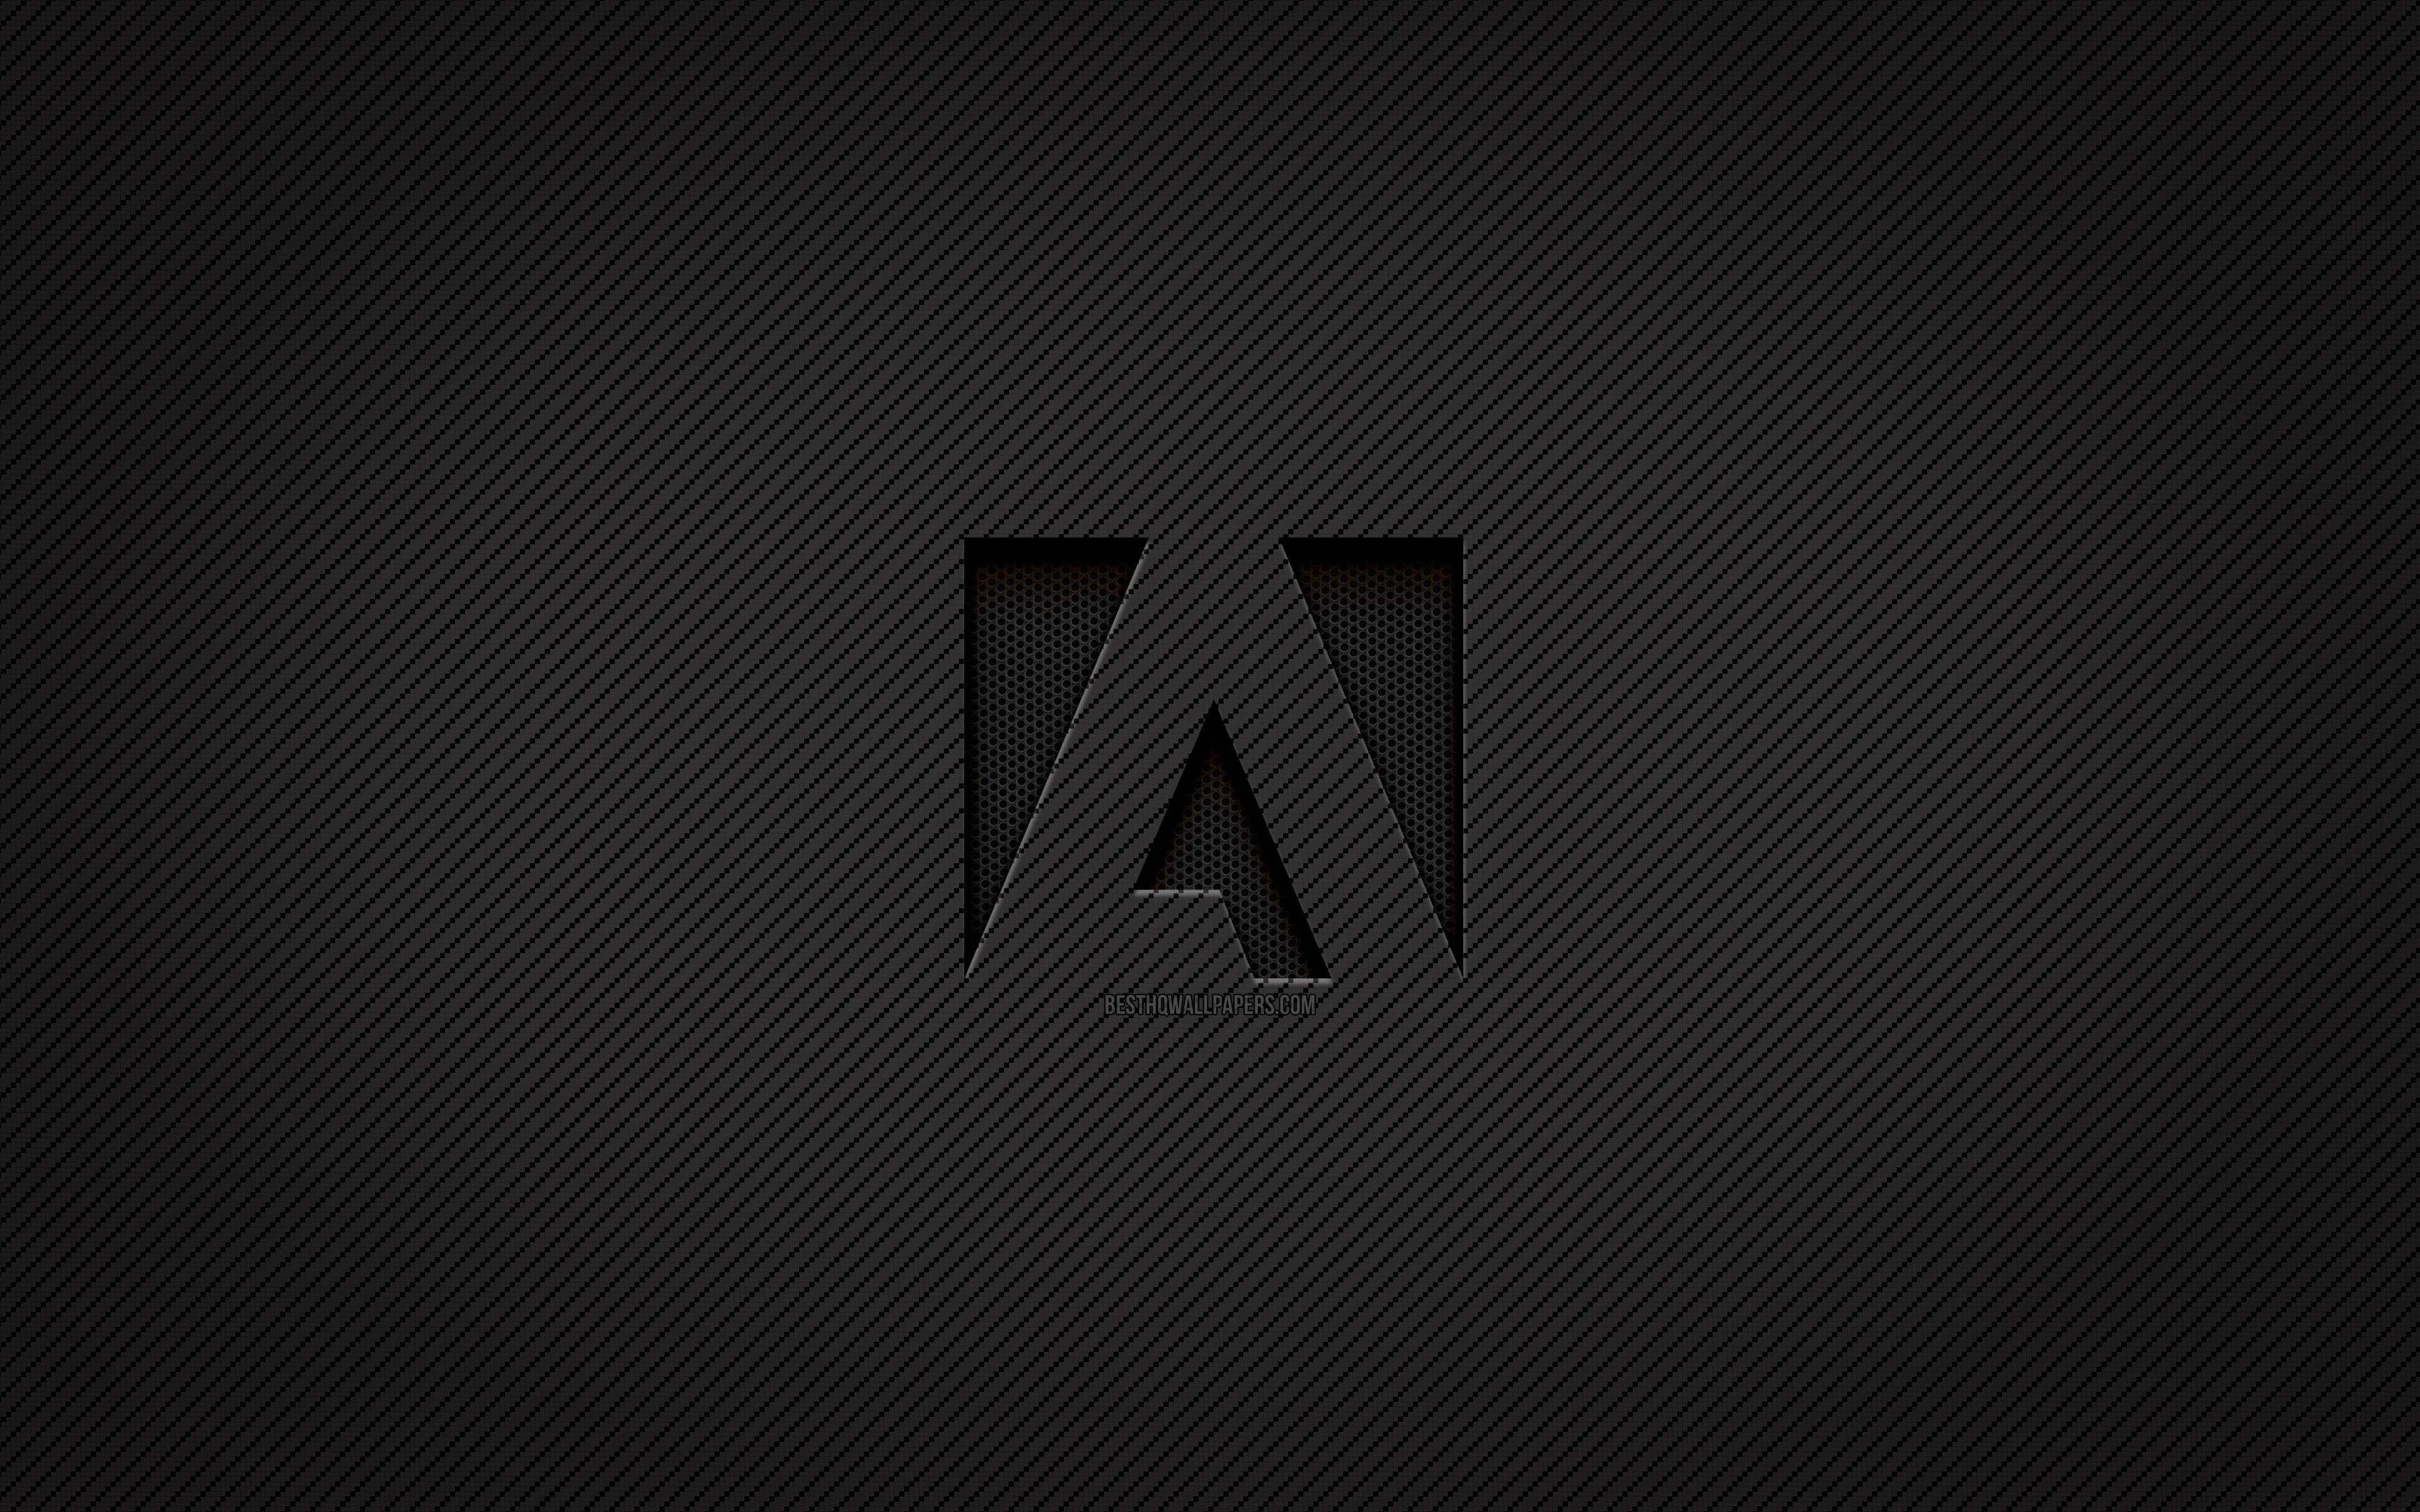 Download wallpaper Adobe carbon logo, 4k, grunge art, carbon background, creative, Adobe black logo, brands, Adobe logo, Adobe for desktop with resolution 3840x2400. High Quality HD picture wallpaper